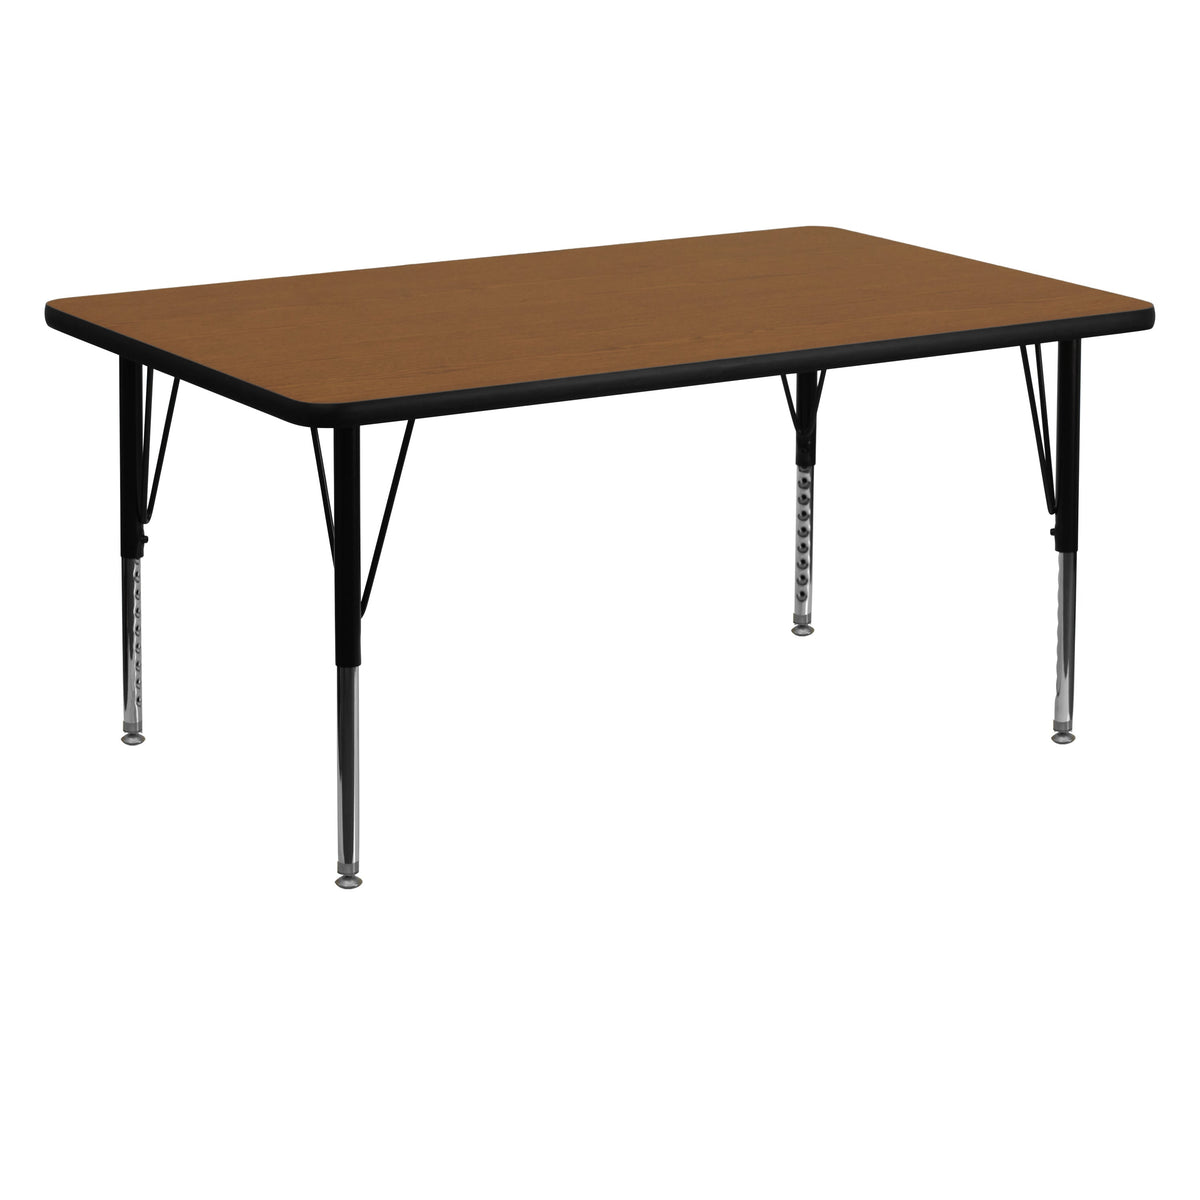 Oak |#| 30inchW x 60inchL Rectangular Oak HP Laminate Activity Table - Height Adjustable Legs